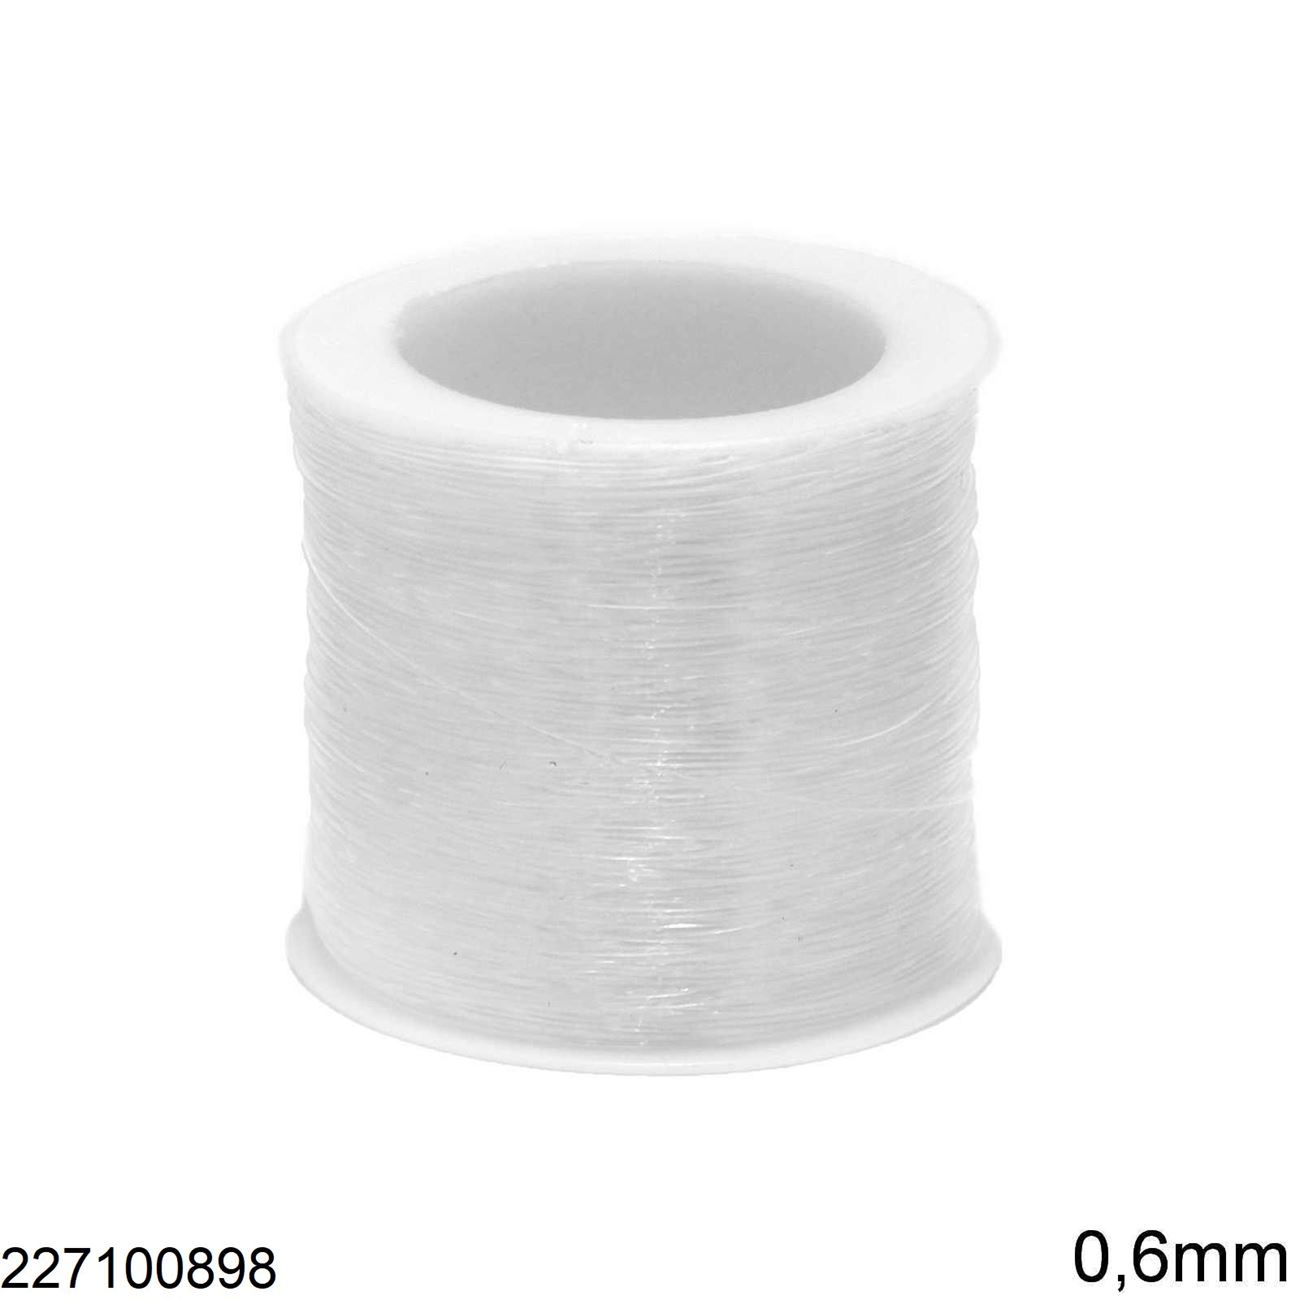 Naylon Fishing Line Thread 0.6mm, 15m Transparent < Elastic Cord